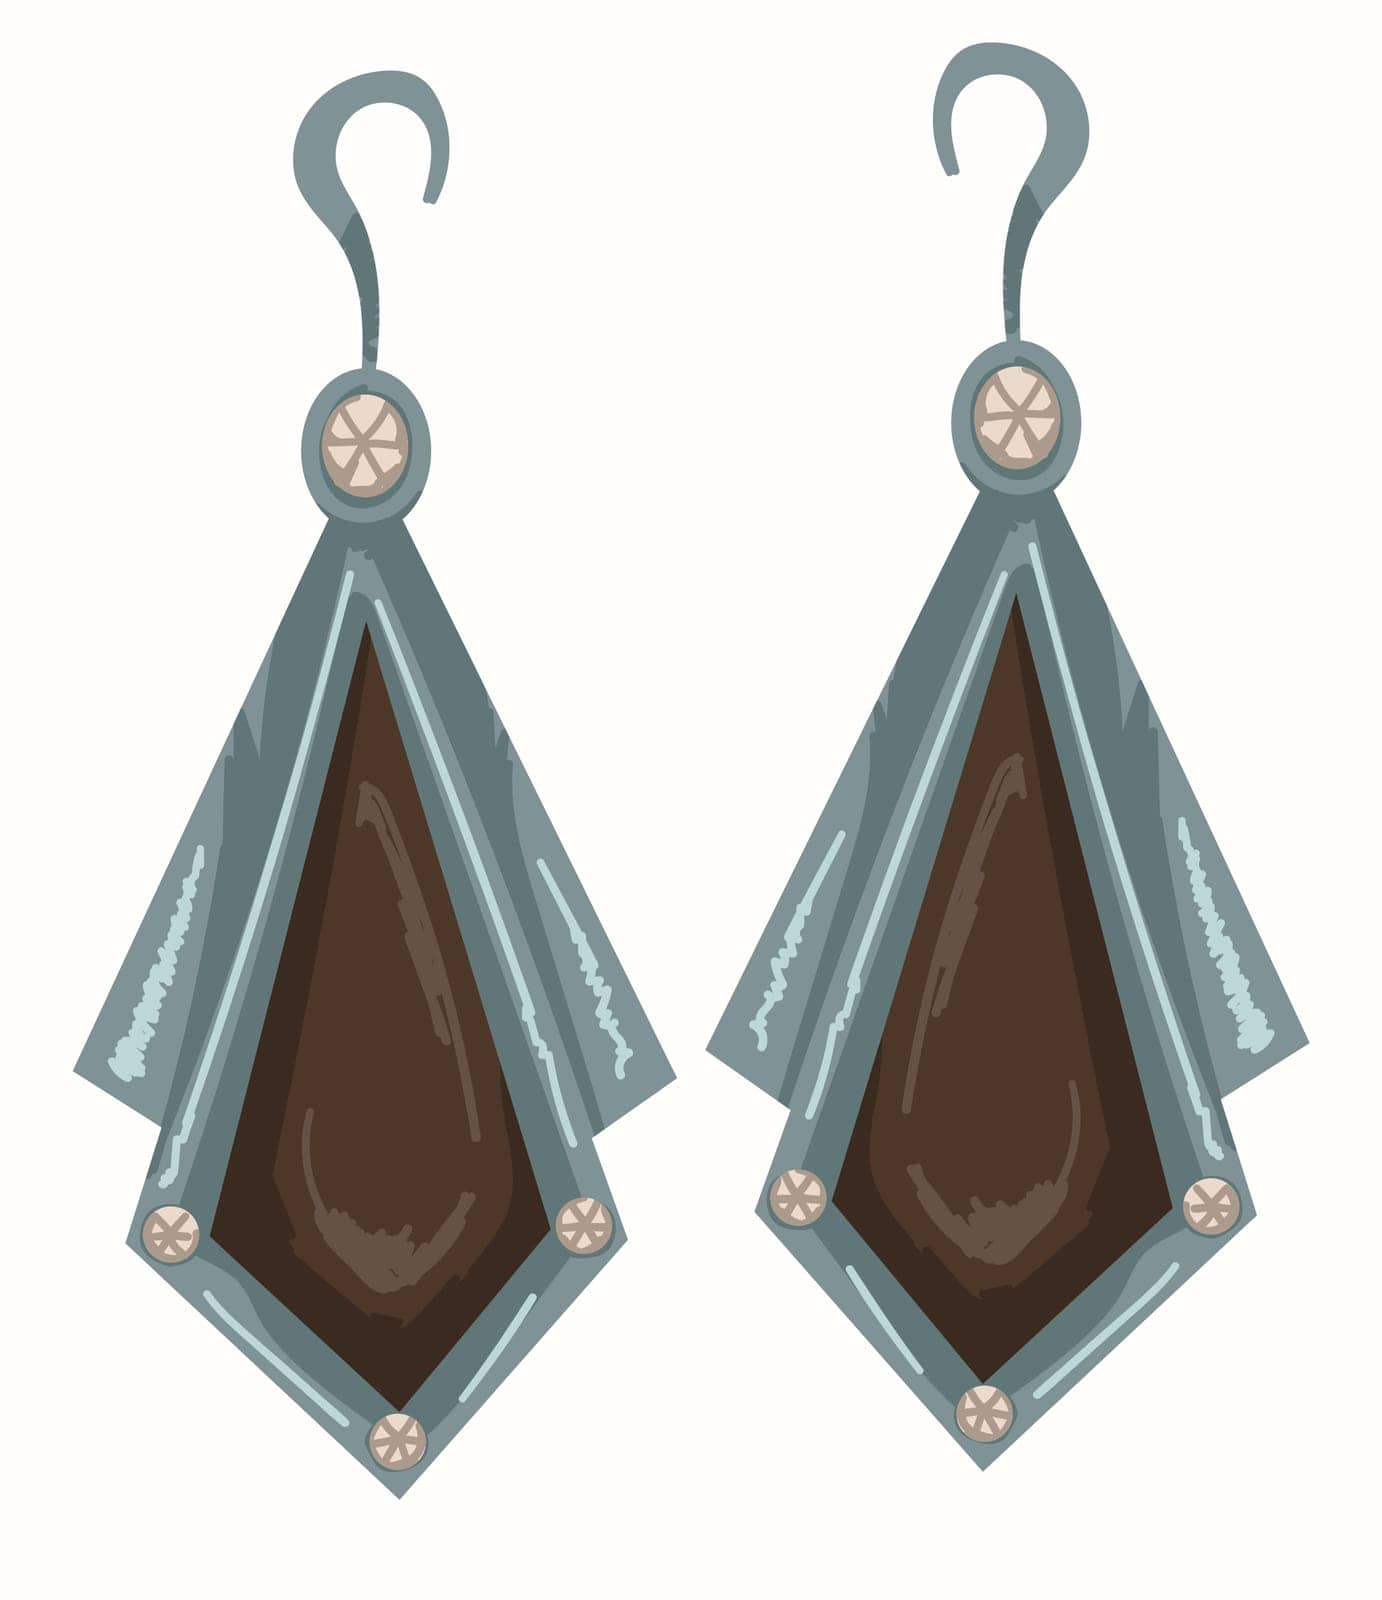 Earrings with geometric shape, vintage jewelry by Sonulkaster